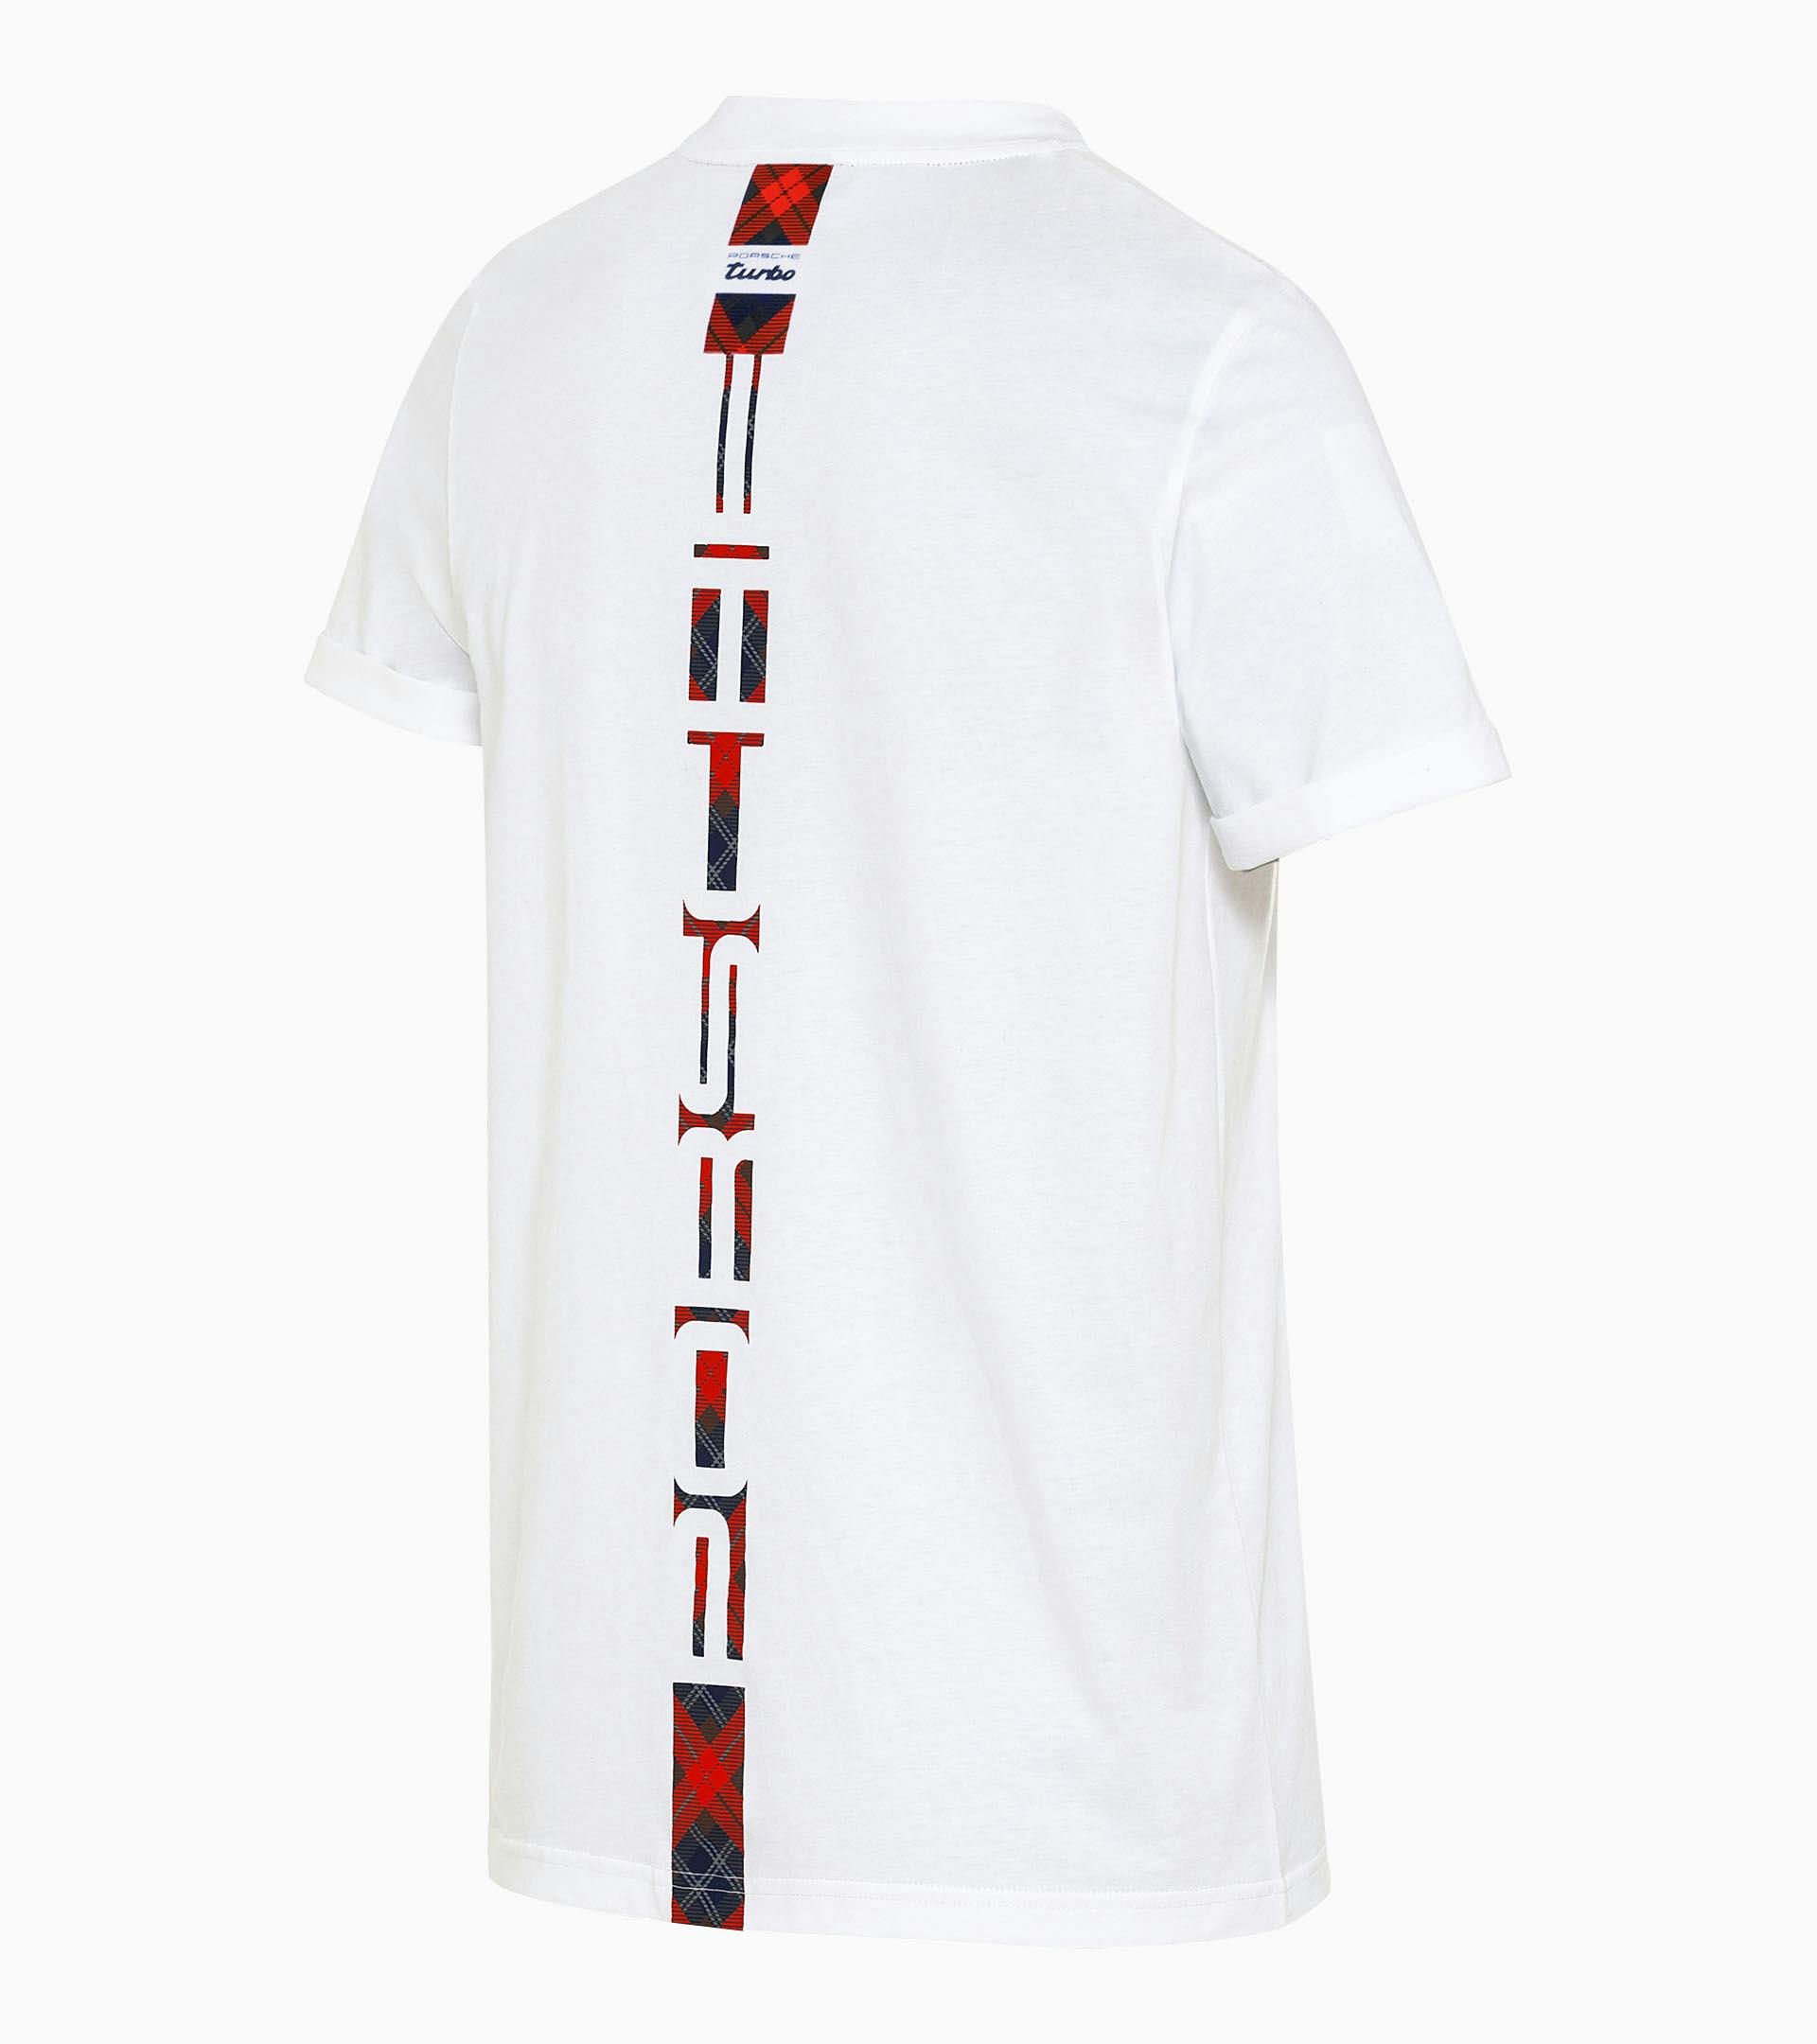 Unisex T-shirt – Turbo No. 1